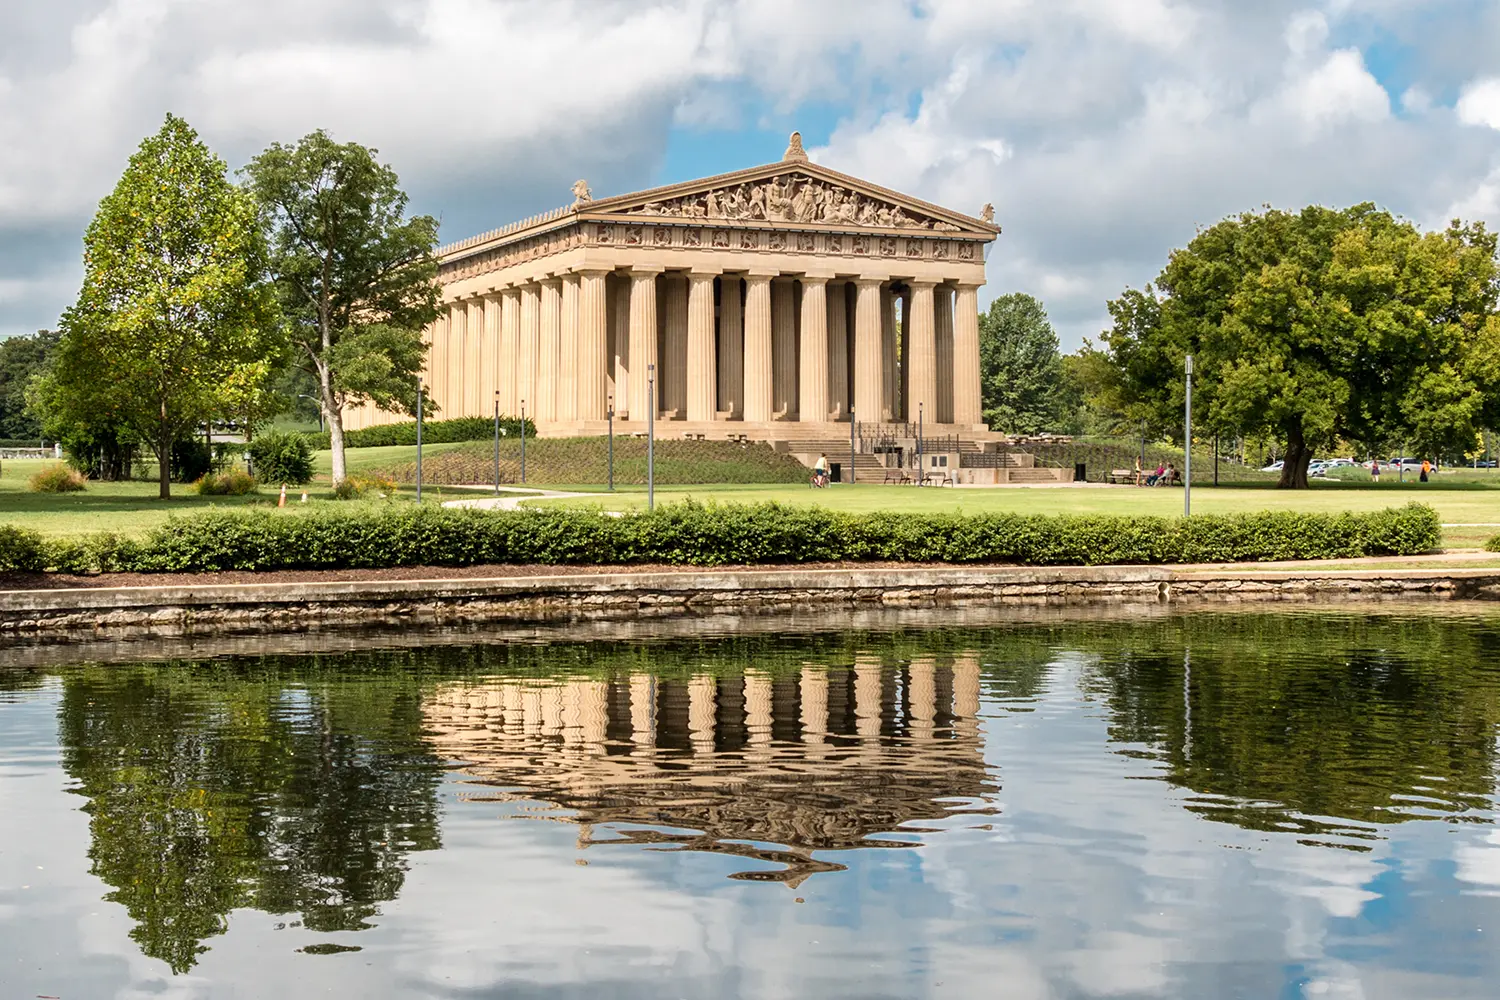 The Parthenon in Centennial Park, near downtown Nashville, TN